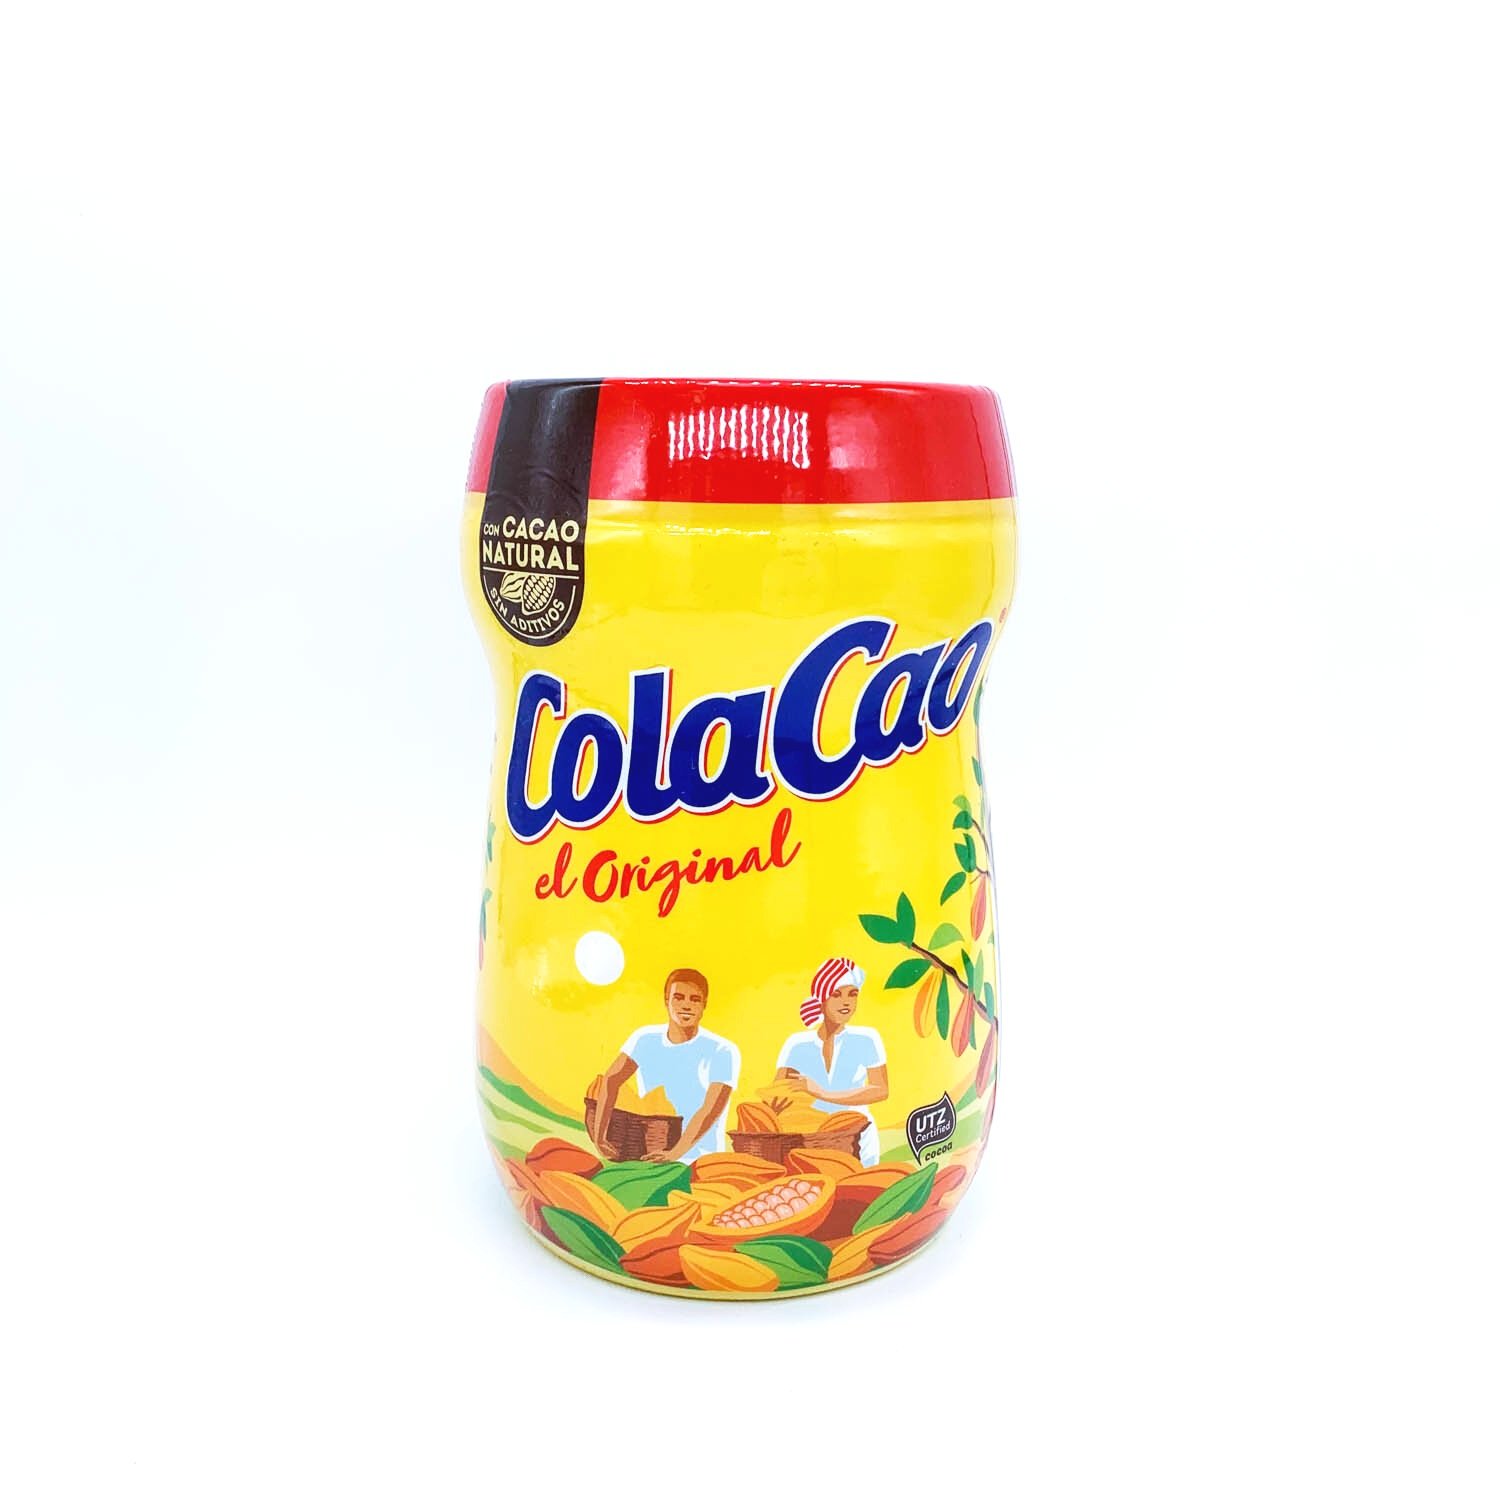 Cola Cao 400g